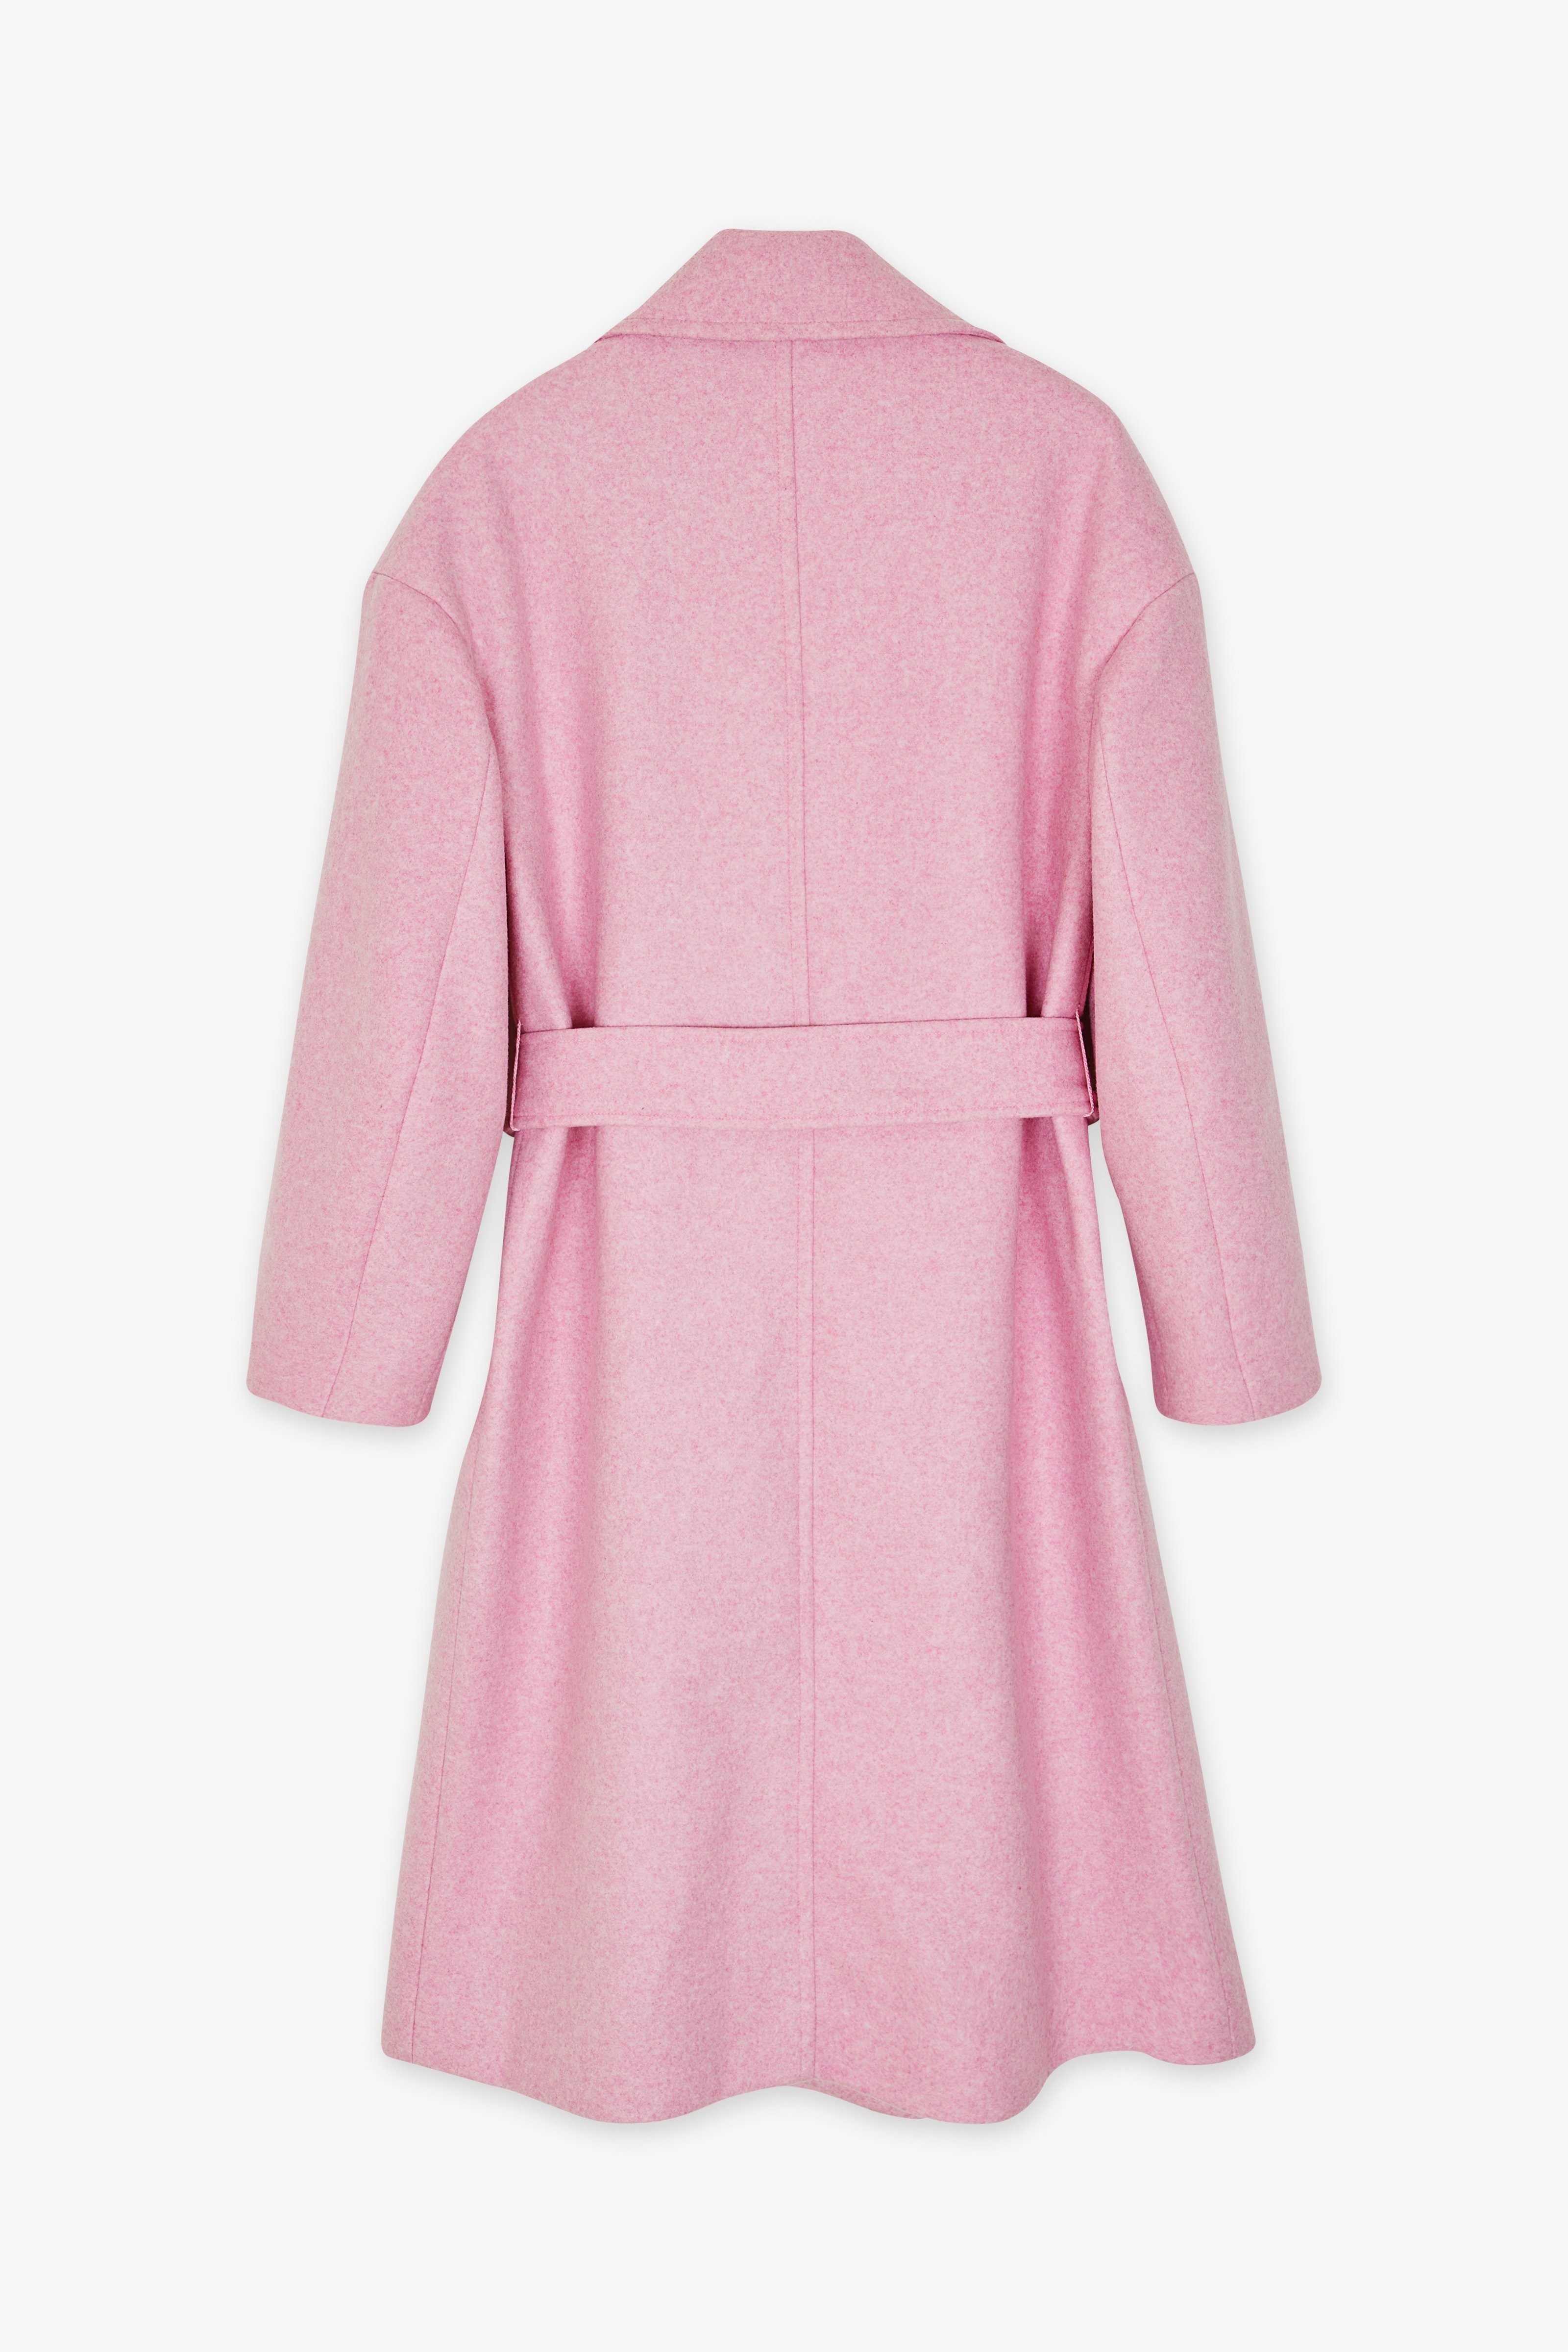 CKS Dames - COMFY - long coat - light pink